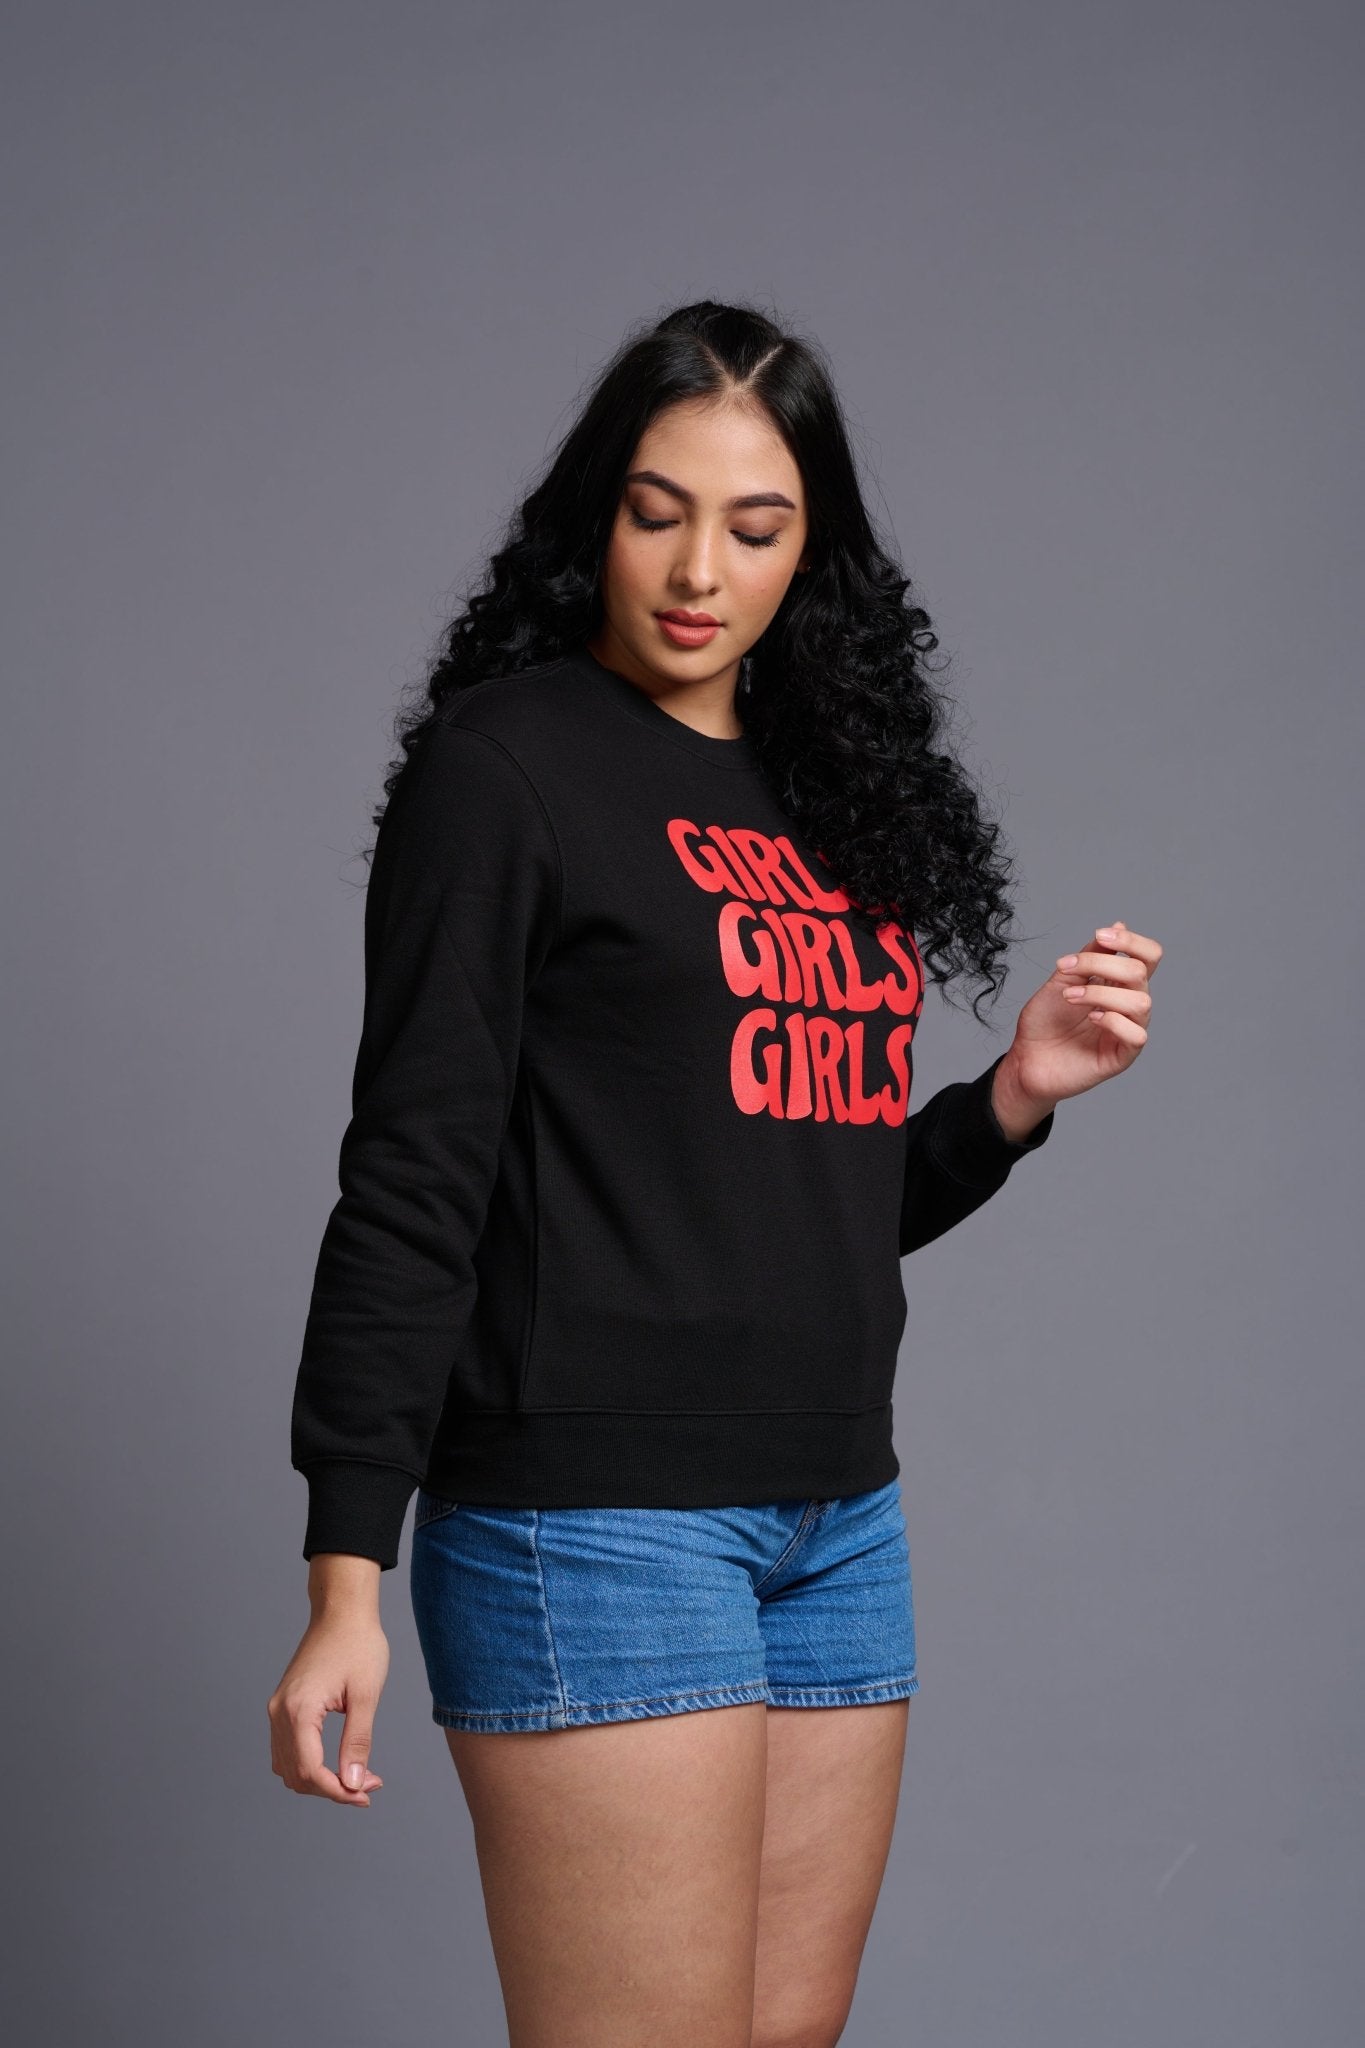 GIRLS! Printed Black Sweatshirt for Women - Go Devil